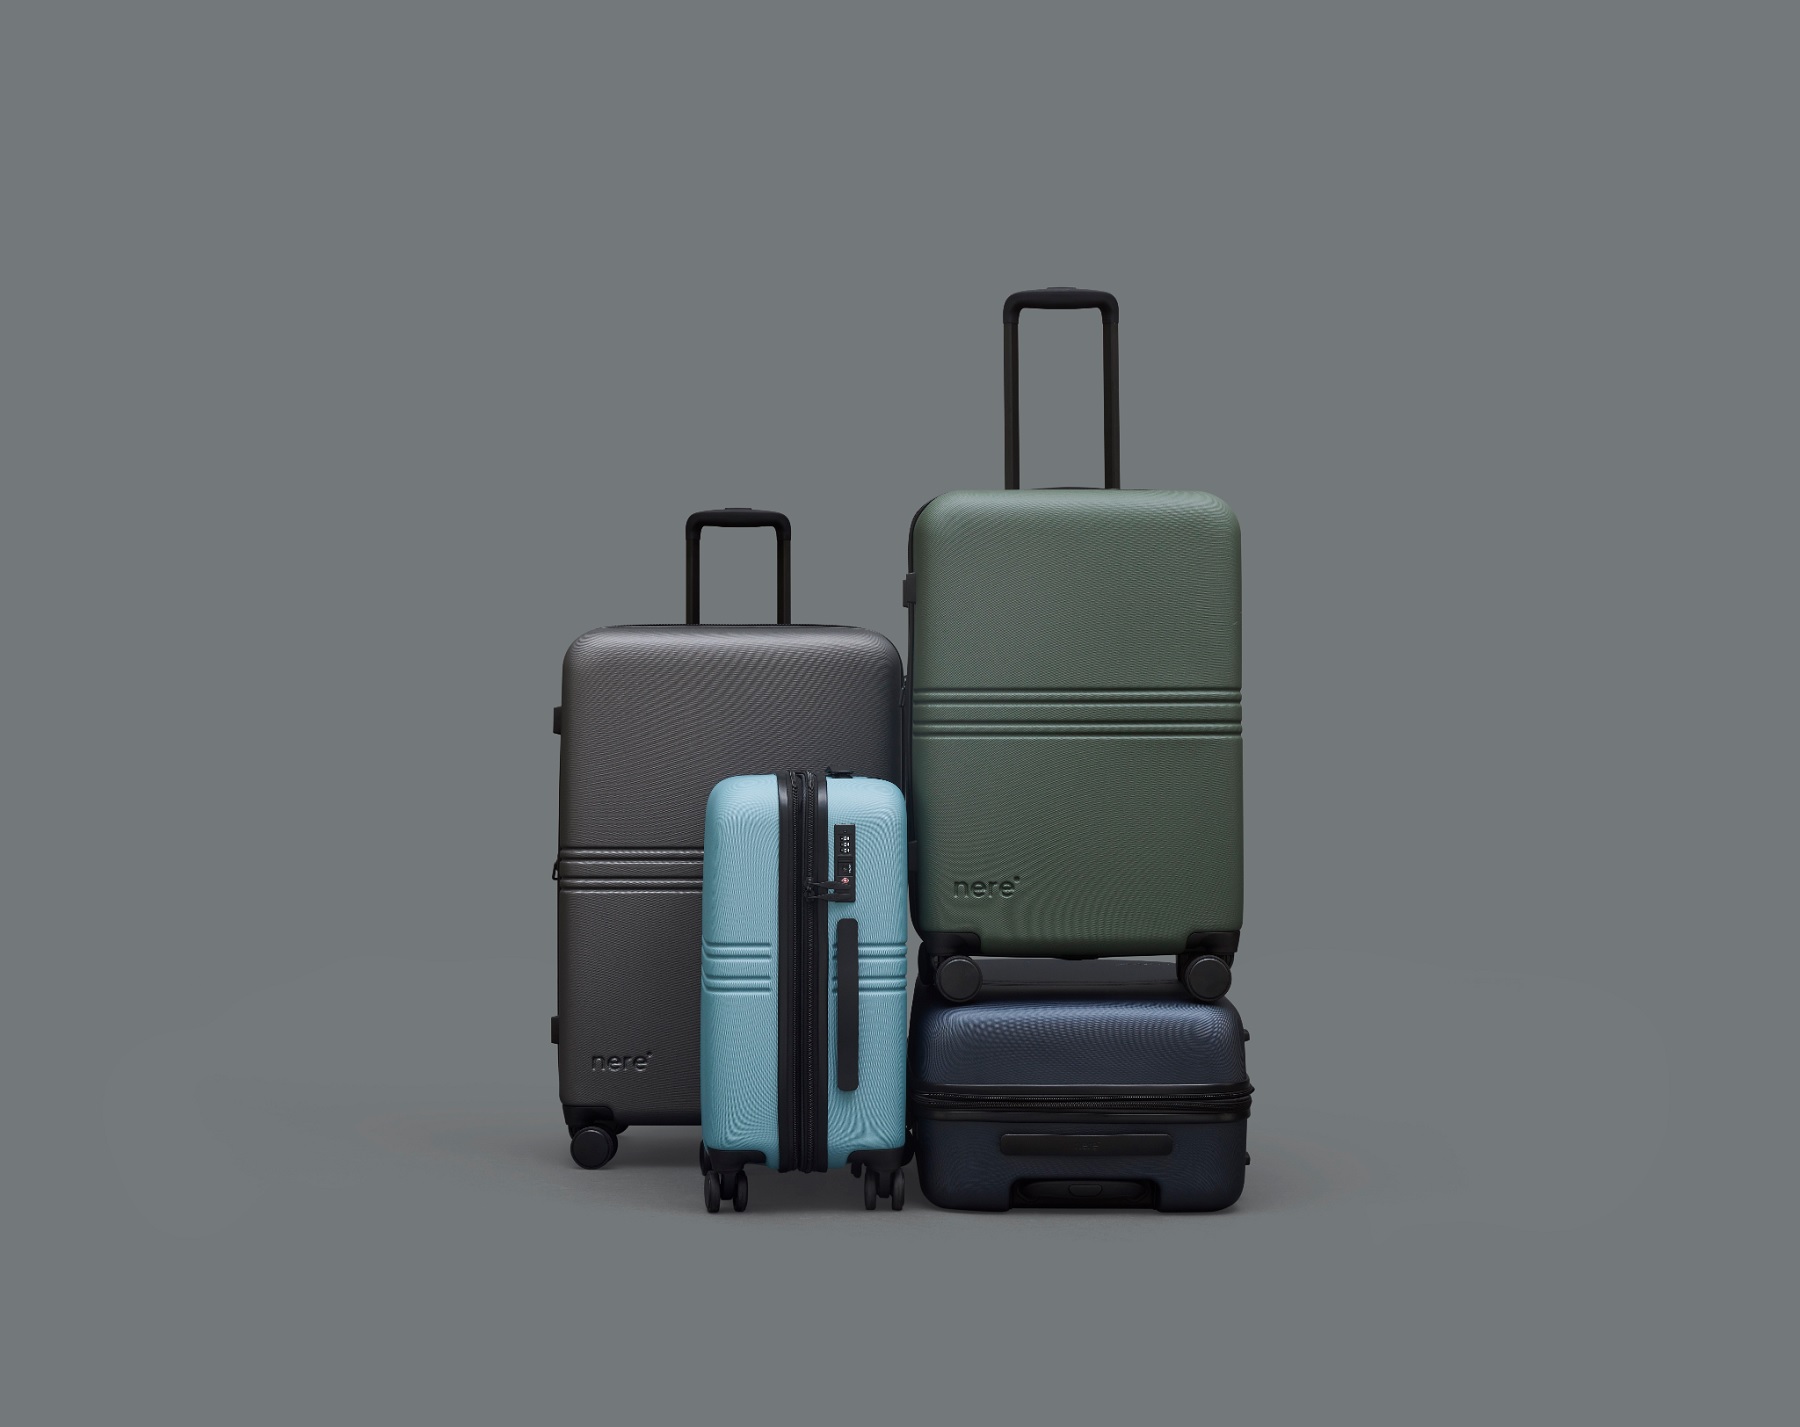 Strandbags releases new travel lifestyle brand Nere - retailbiz